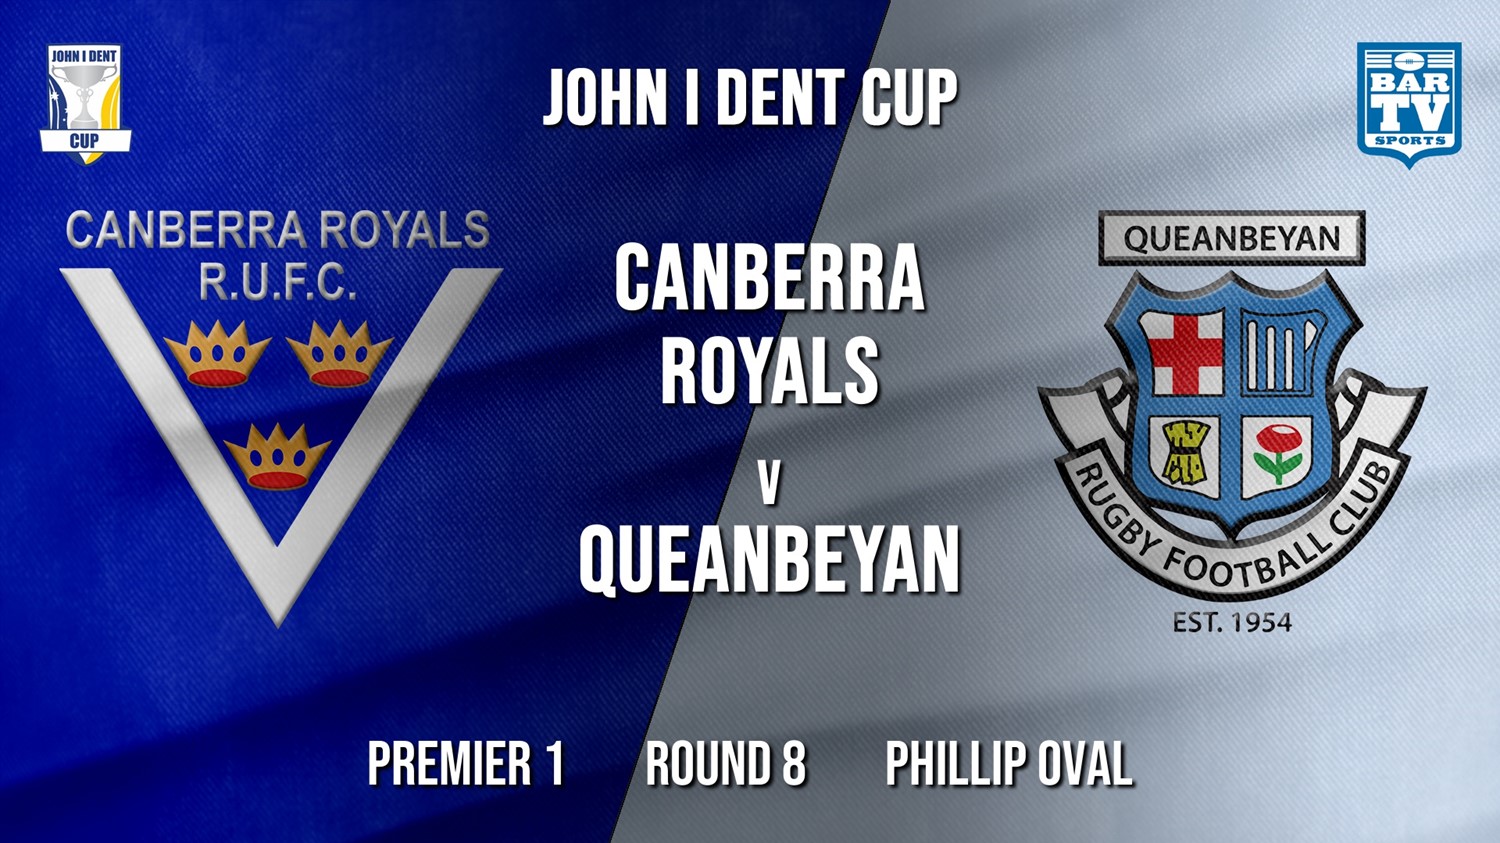 John I Dent Round 8 - Premier 1 - Canberra Royals v Queanbeyan Whites Minigame Slate Image